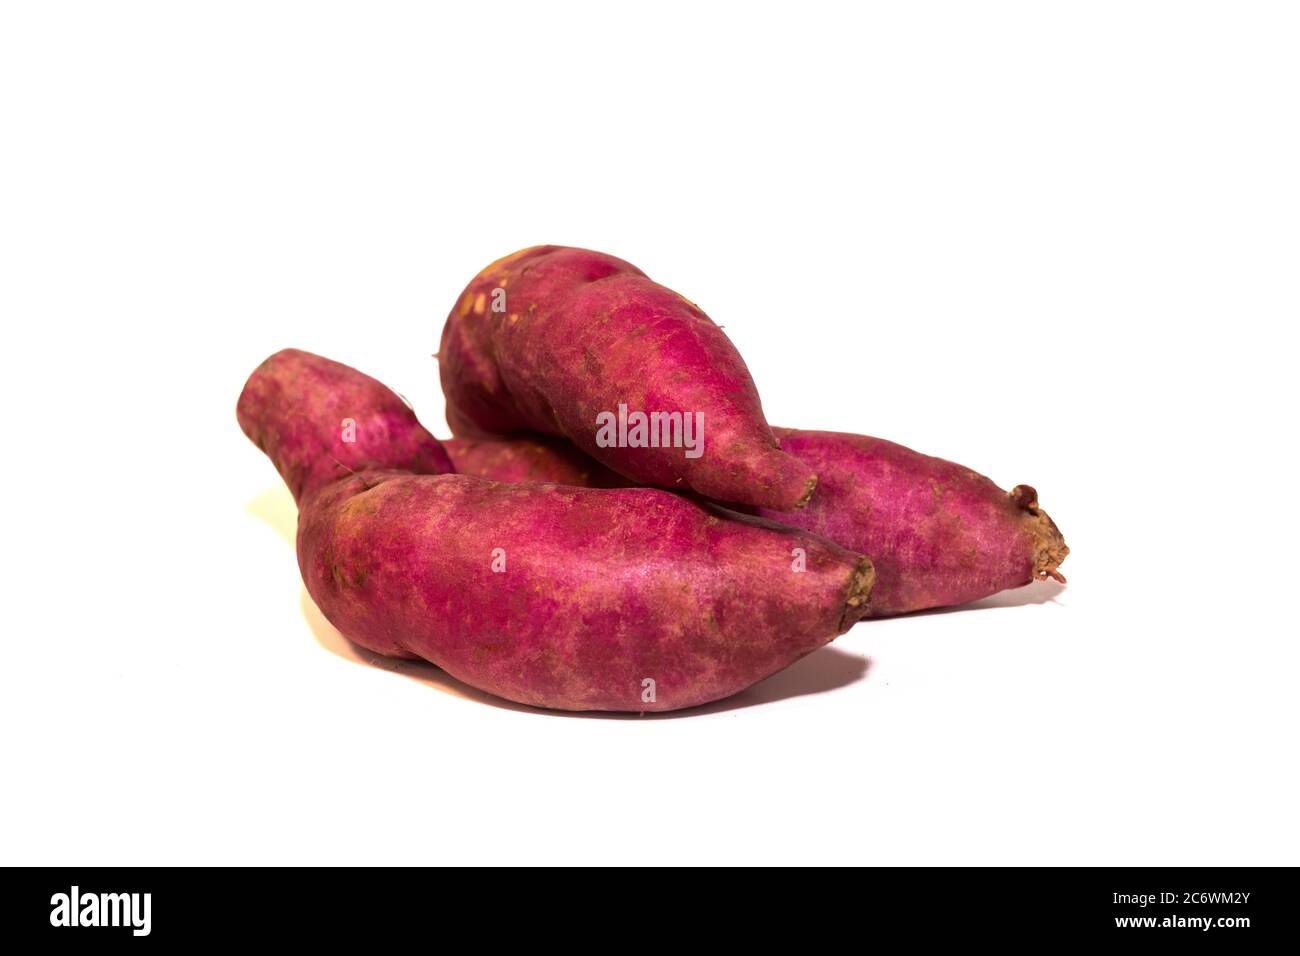 Three sweet potatoes on white background Stock Photo